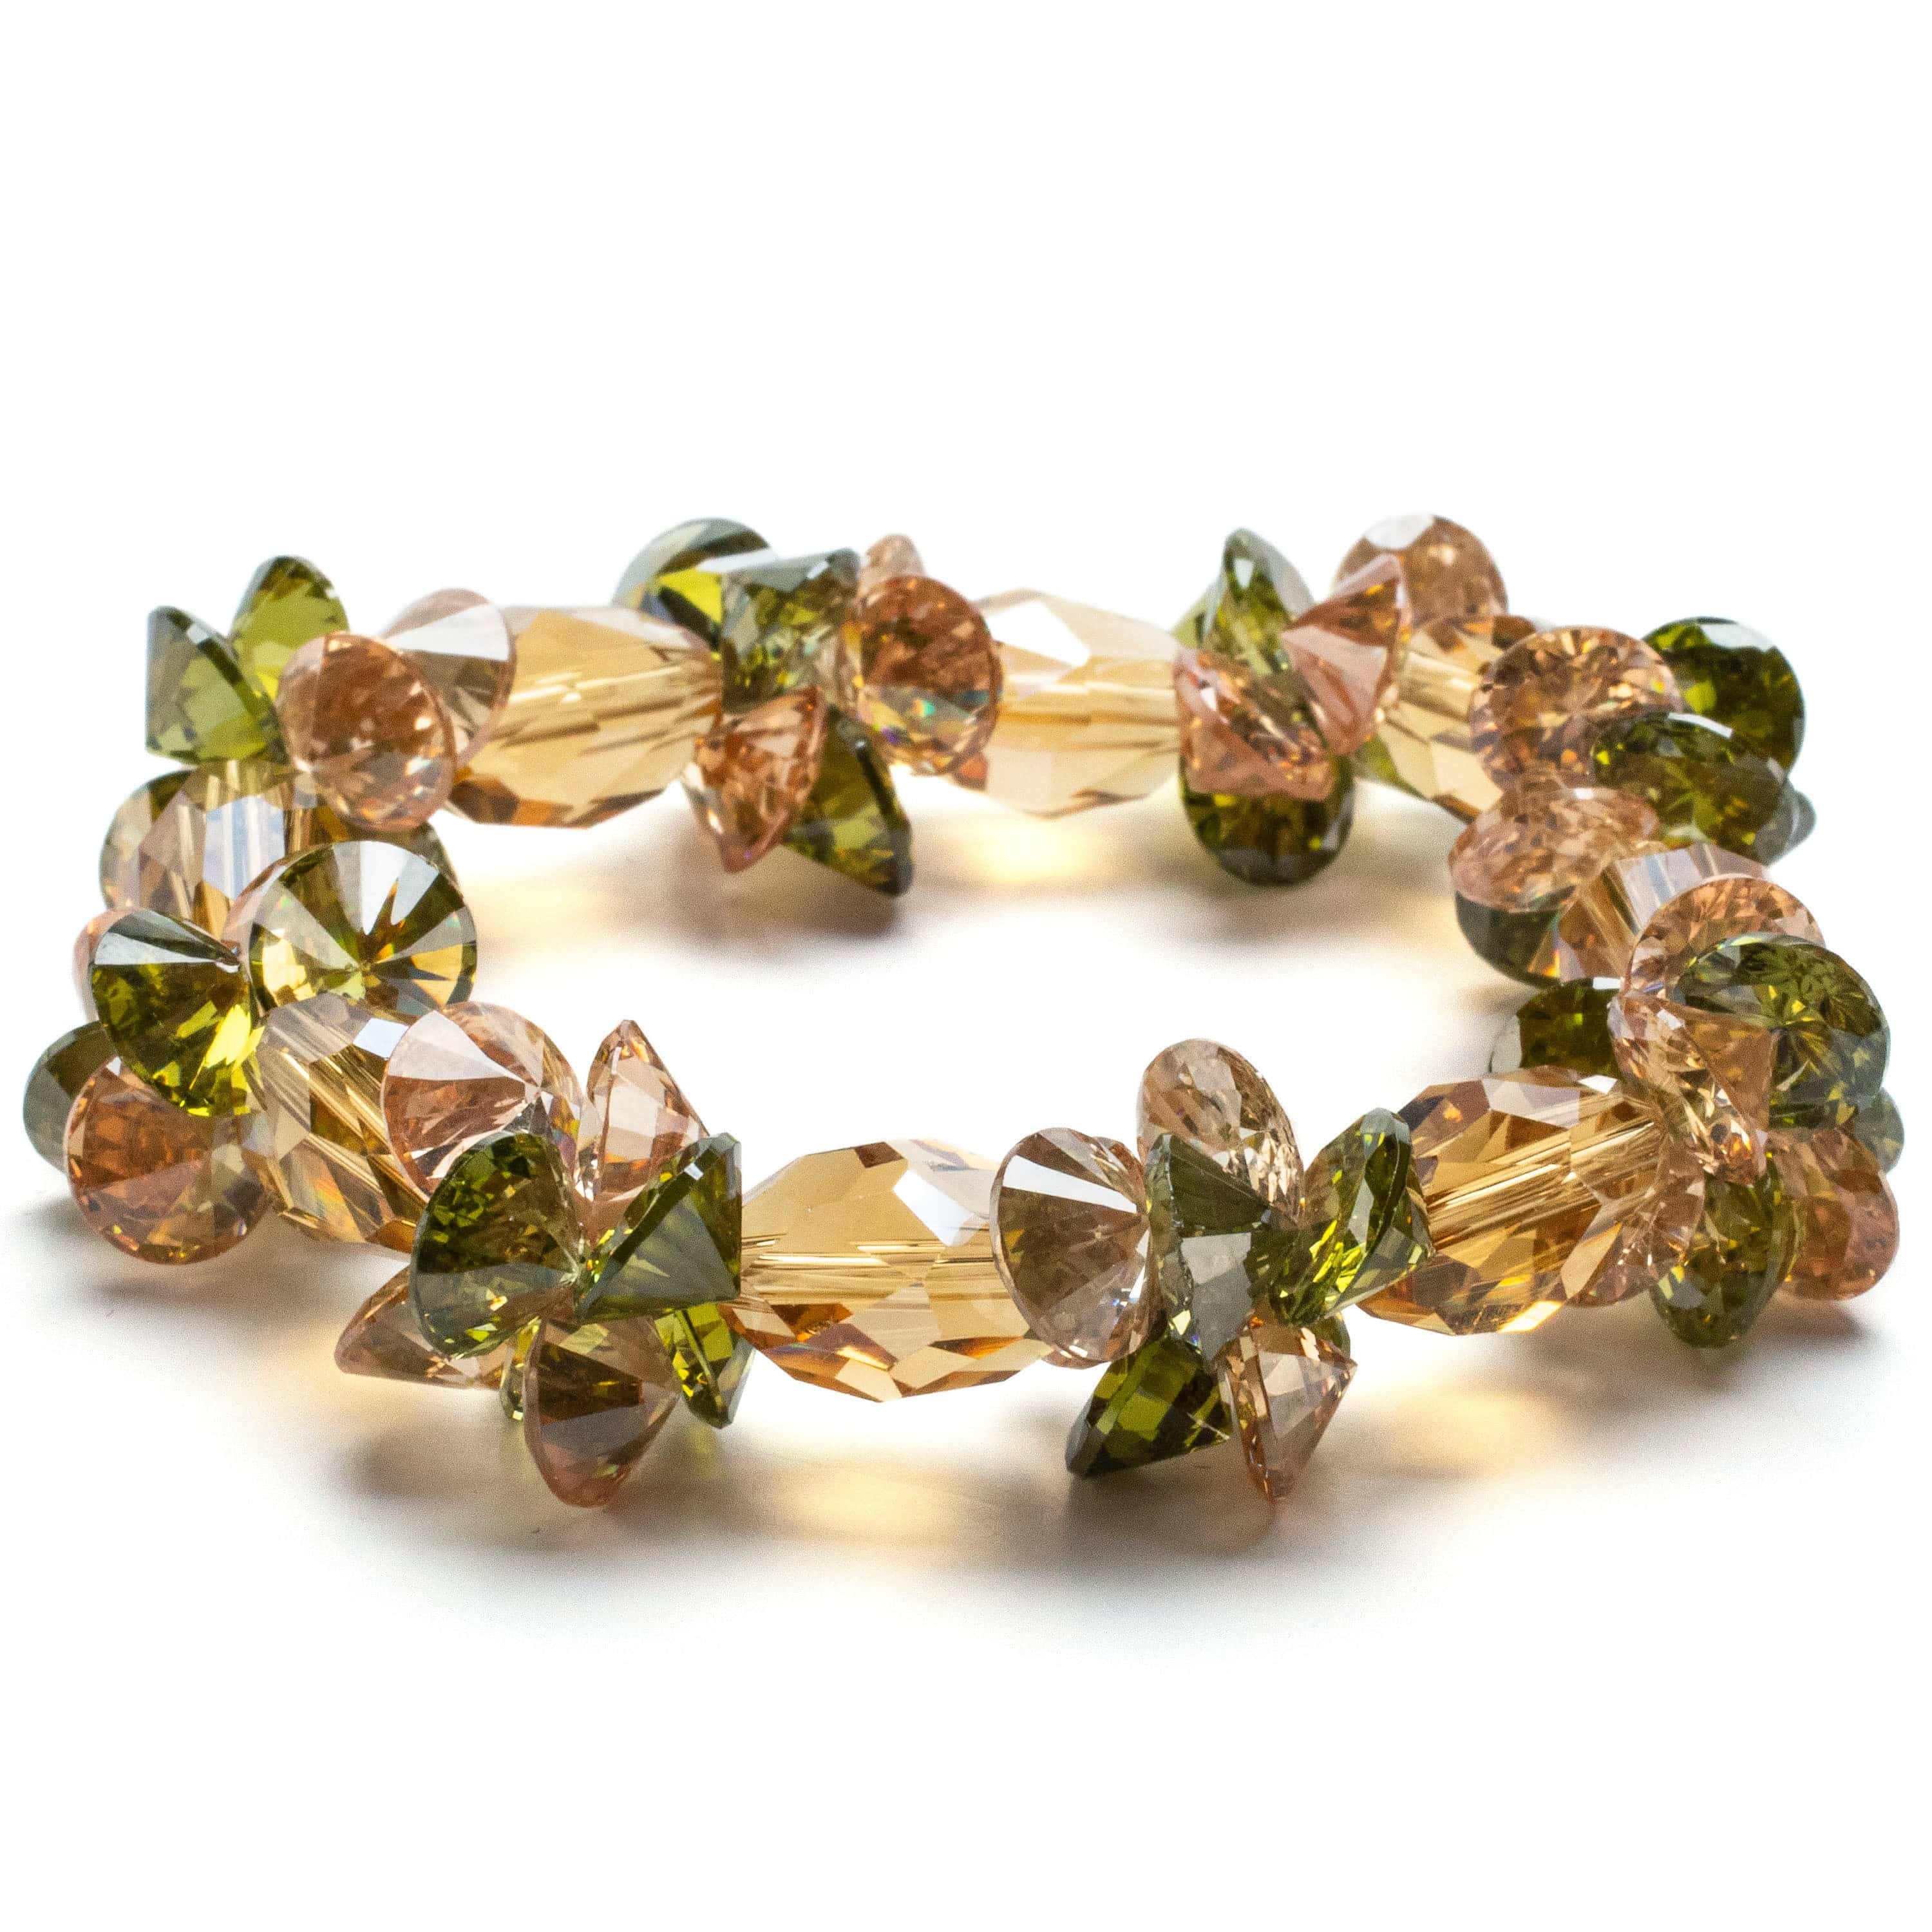 Kalifano Cubic Zirconia Bracelets Autumn Faceted Cubic Zirconia Crystal Elastic Bracelet GOLD-BCZ-22